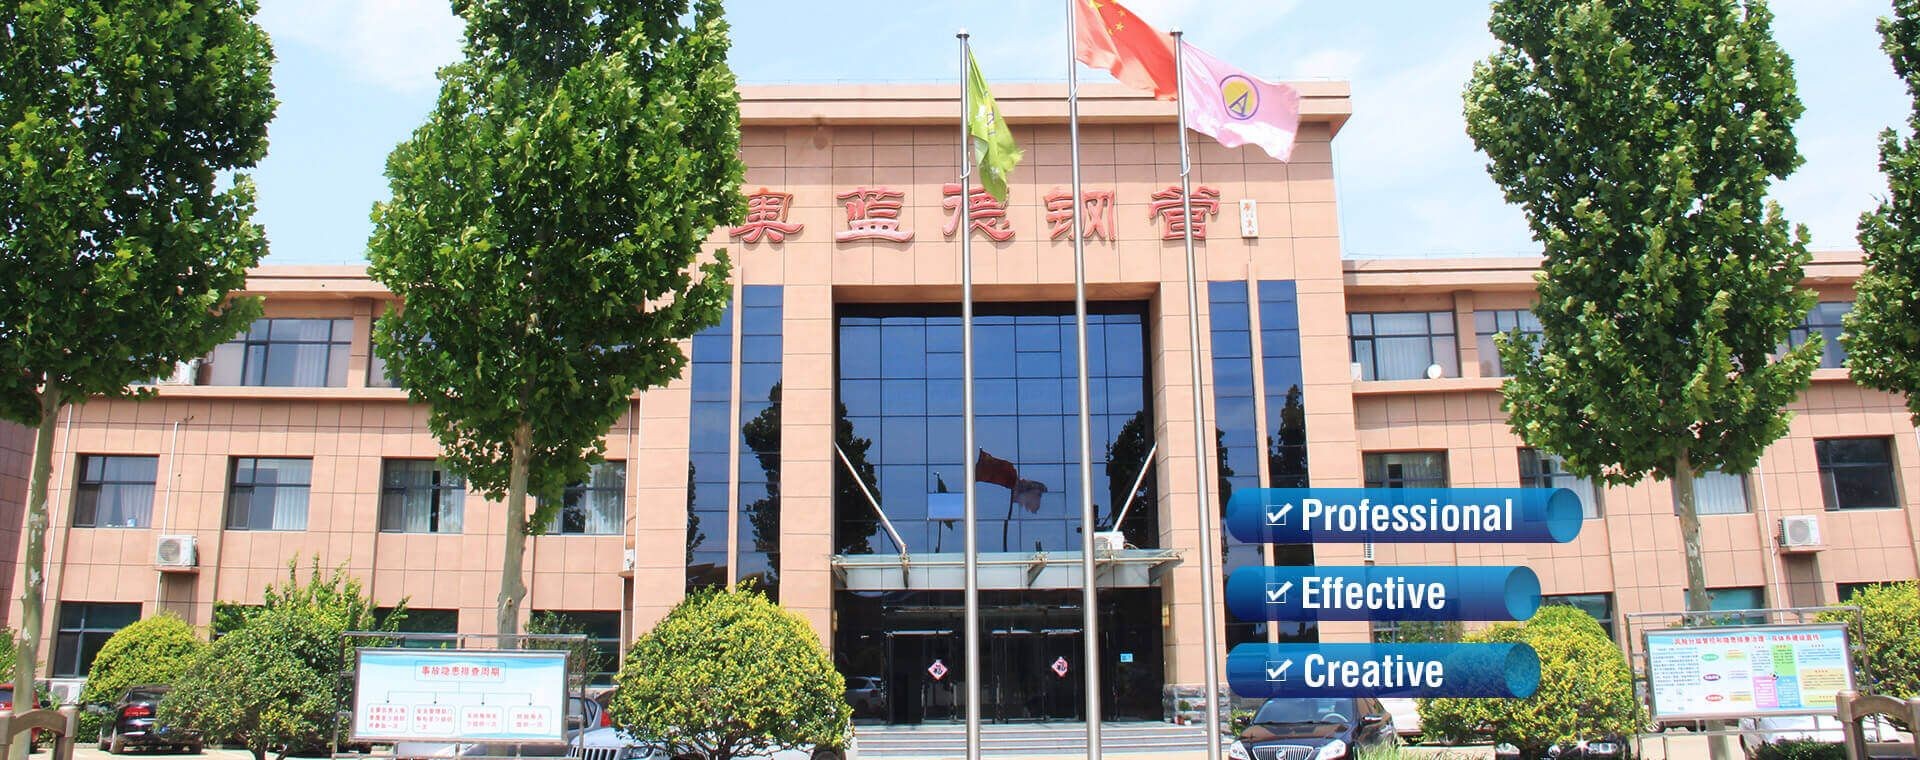 Cangzhou Botop International Co., Ltd